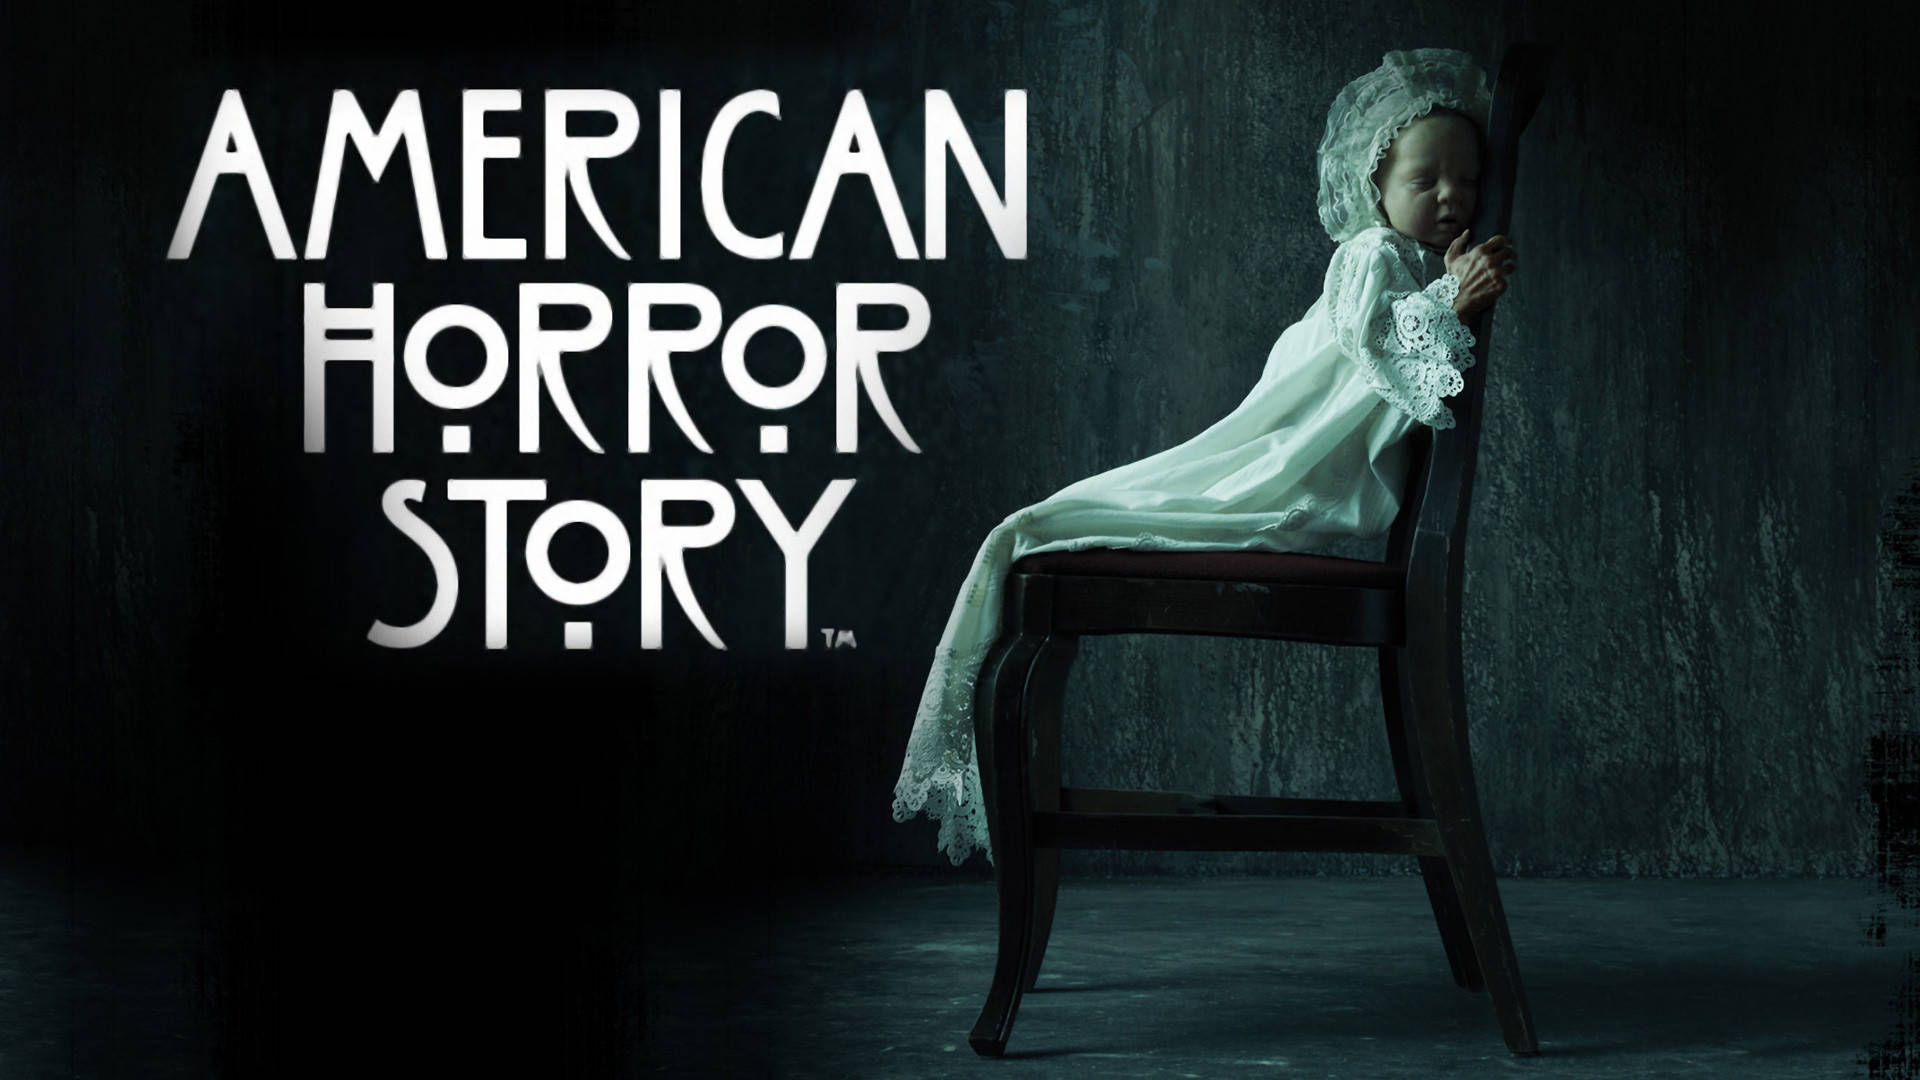 Plano De Fundo De American Horror Story